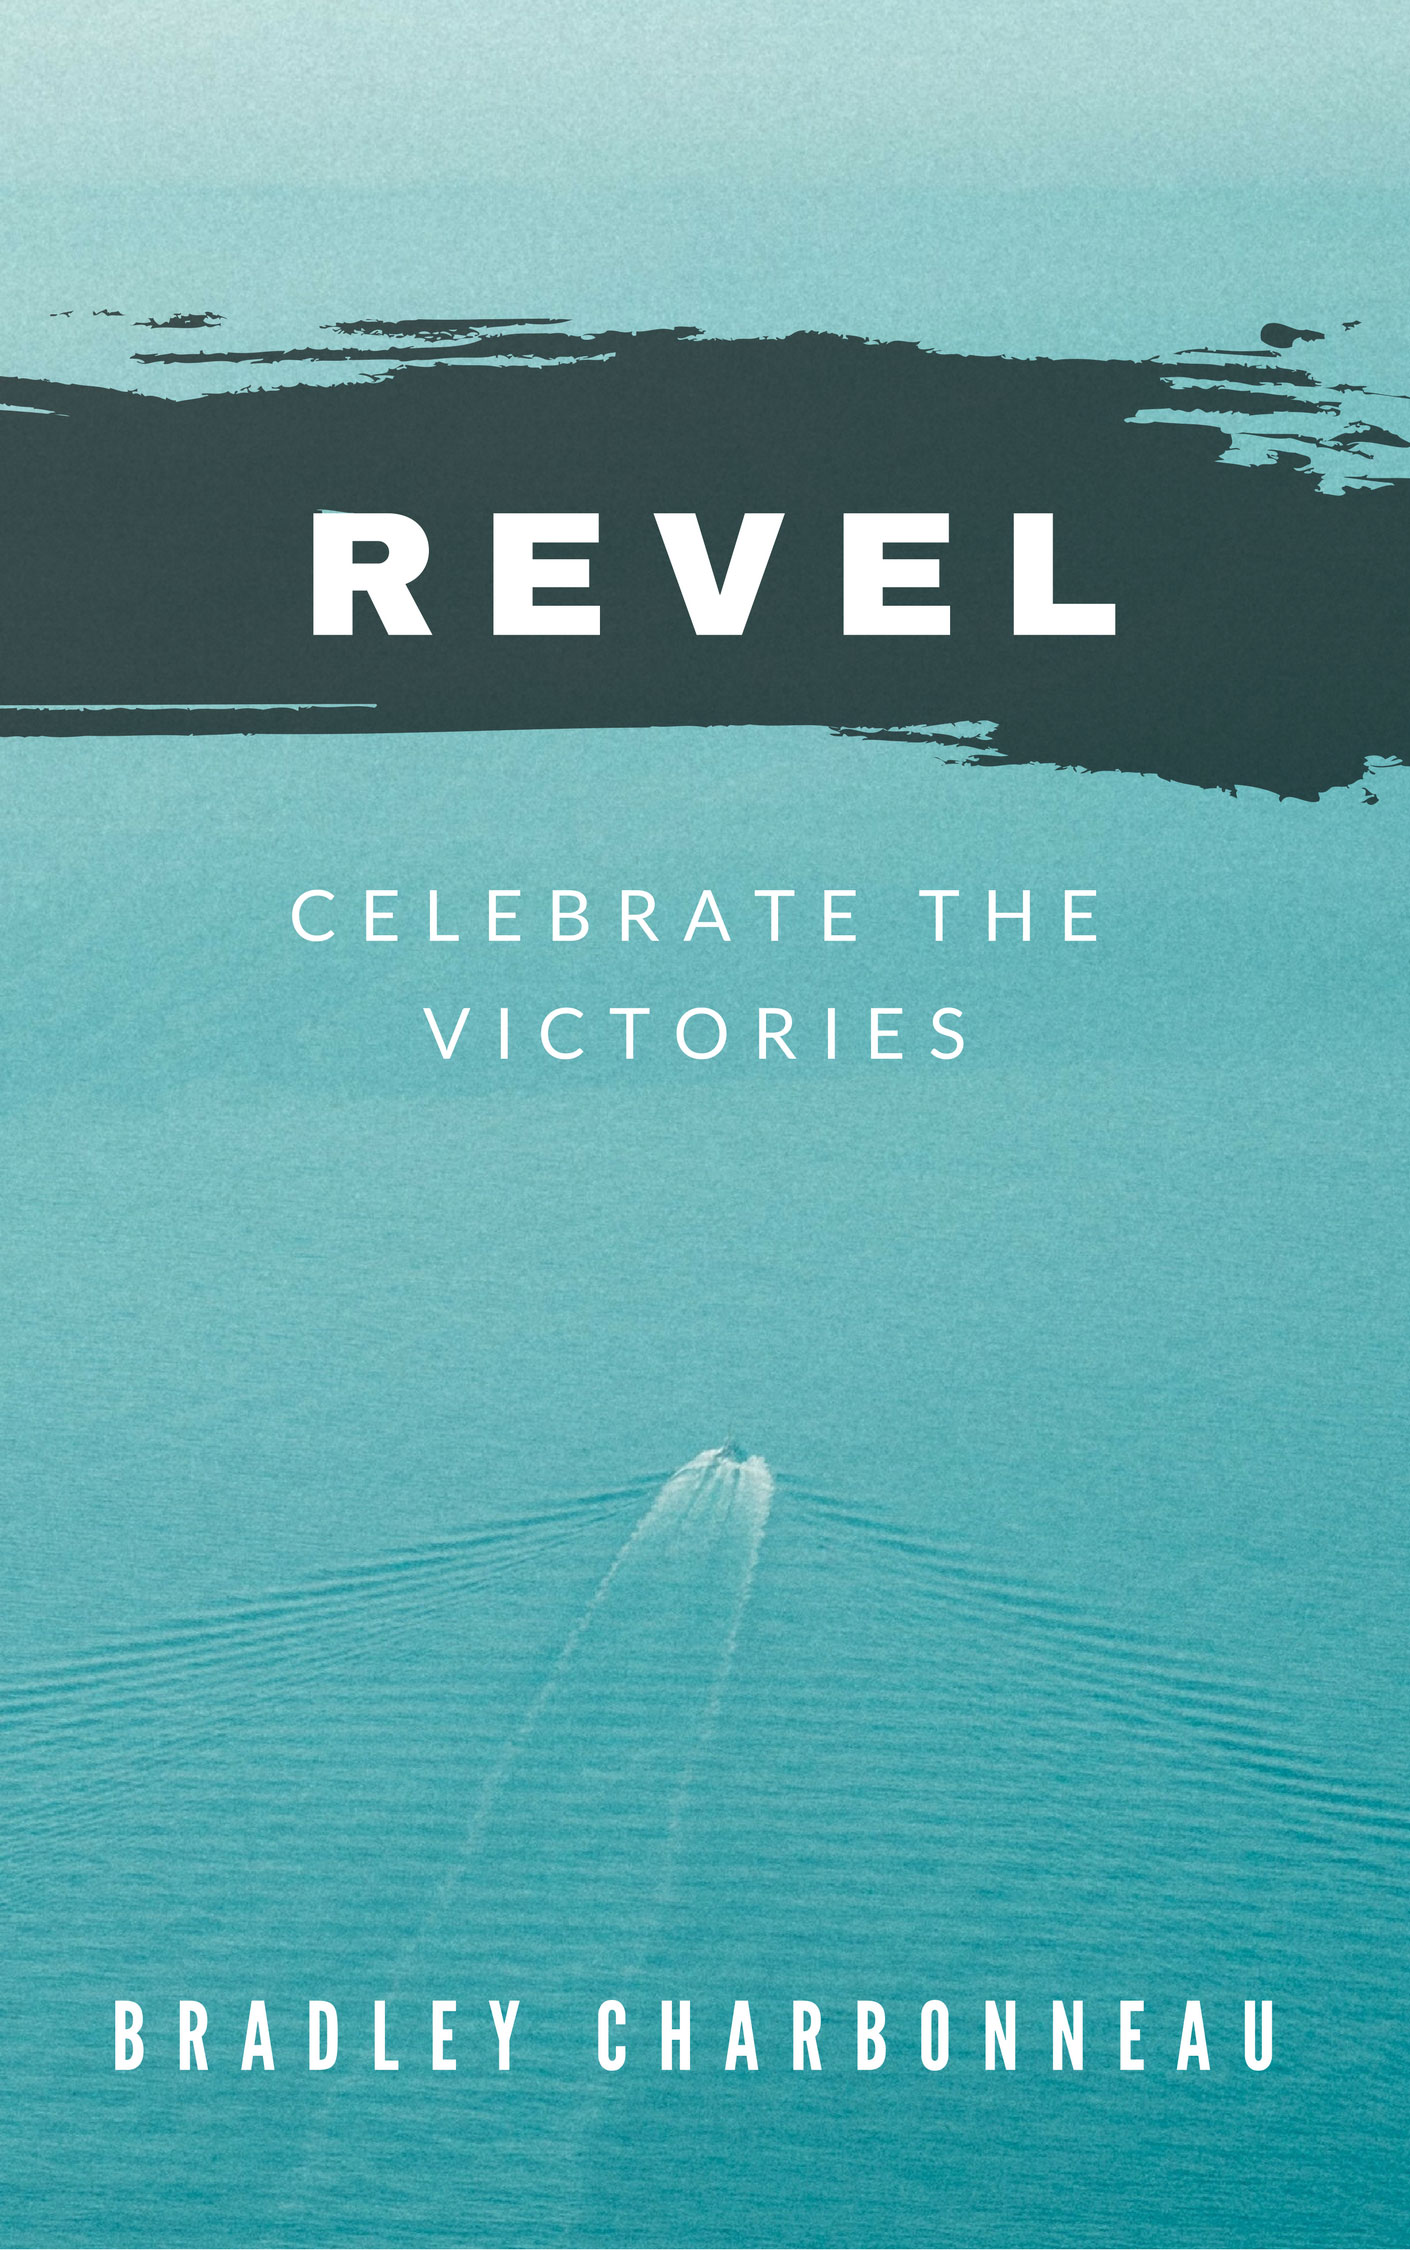 Revel: Celebrate the Victories